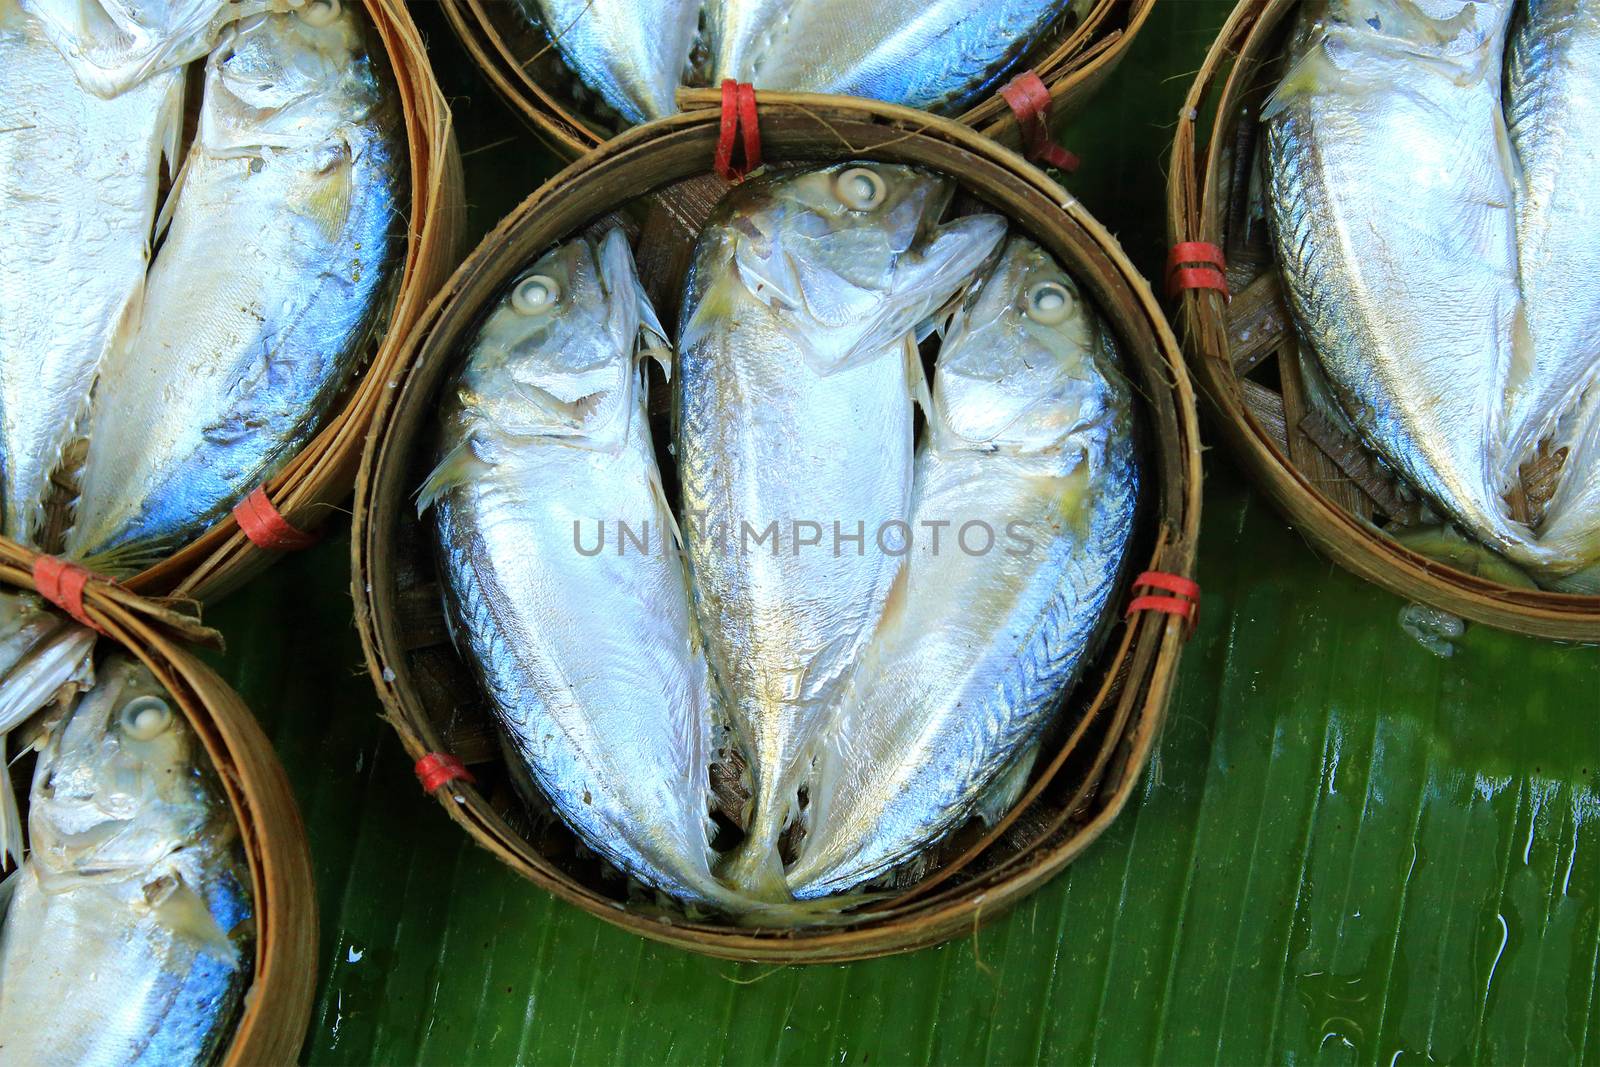 Mackerel fish in bamboo basket at market, Thailand by foto76